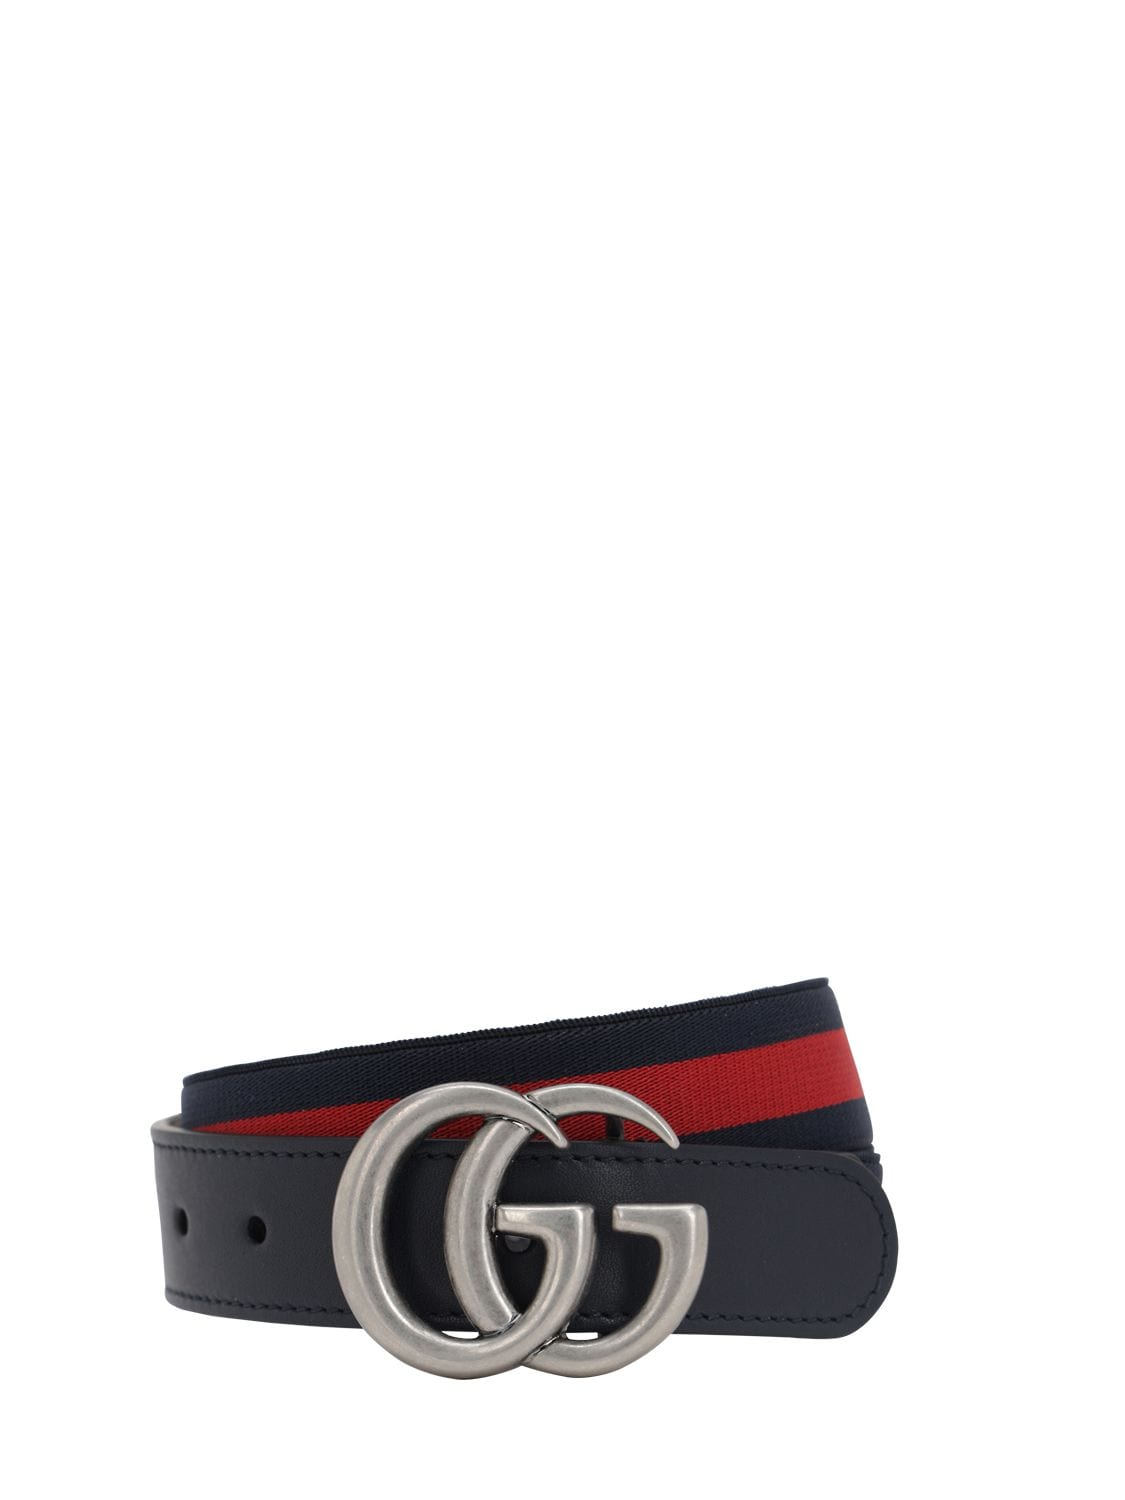 Nero Farfetch Accessori Cinture e bretelle Cinture GG buckle belt 